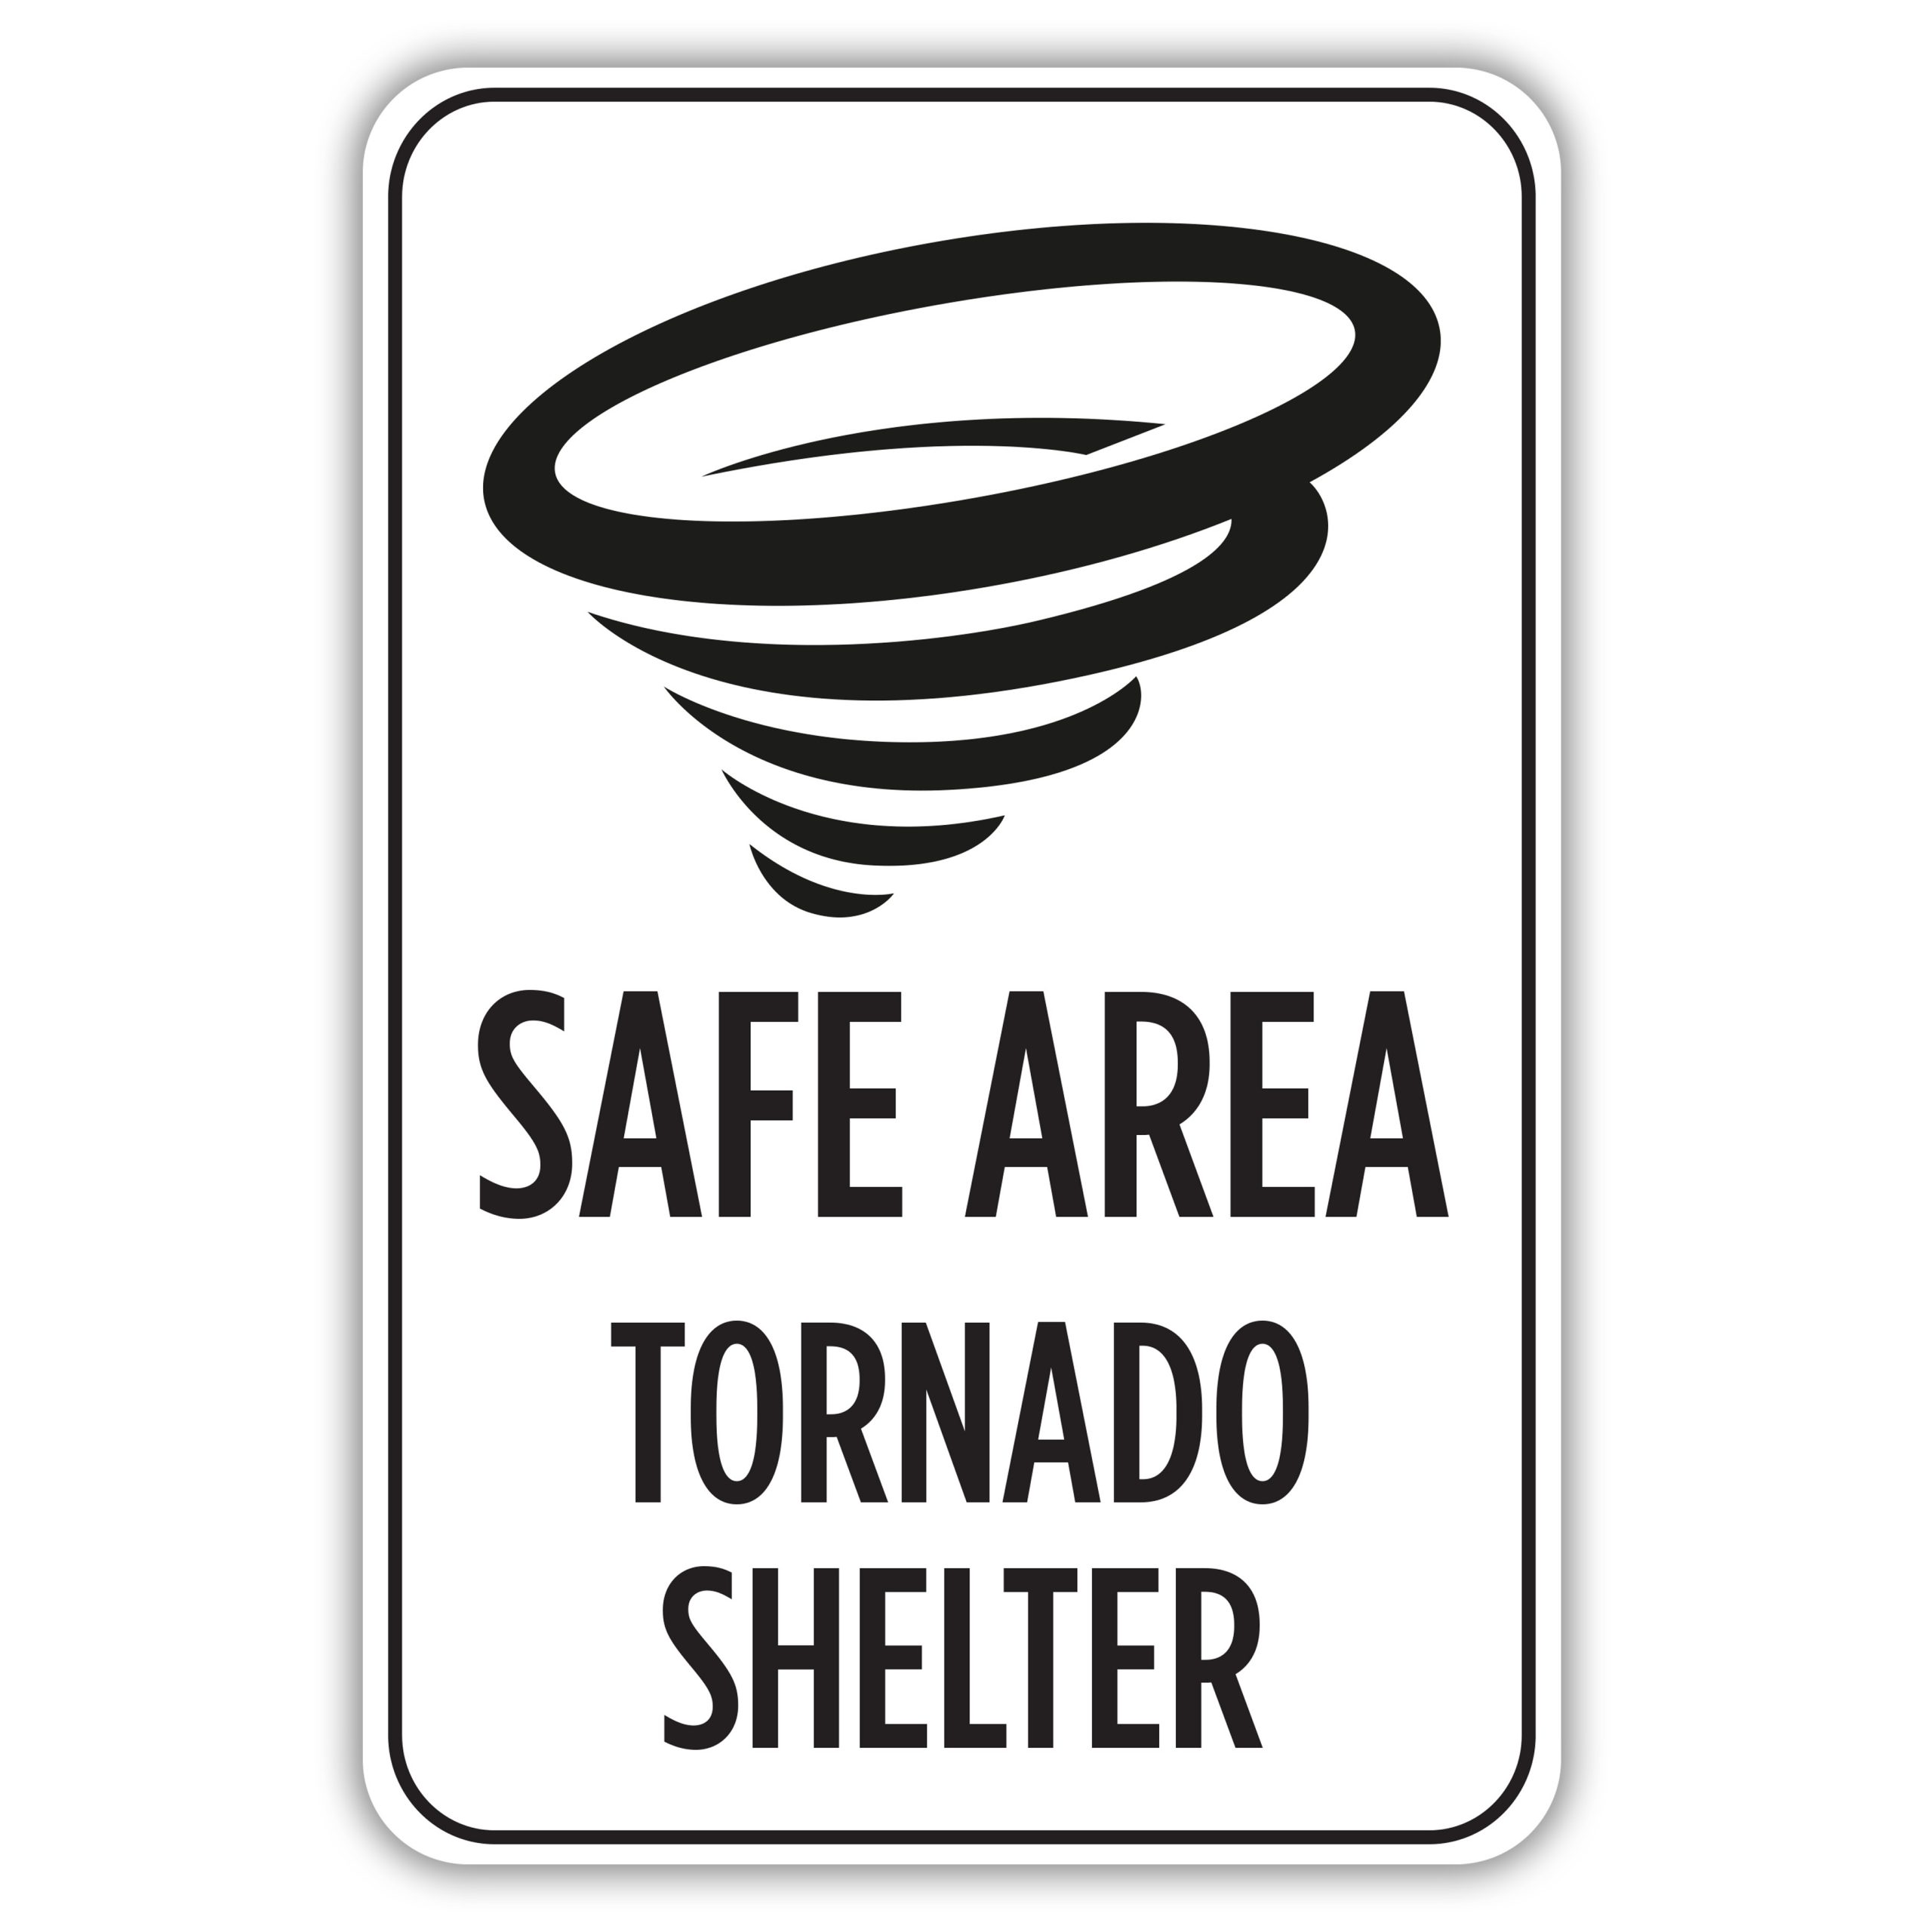 SAFE AREA TORNADO SHELTER - American Sign Company